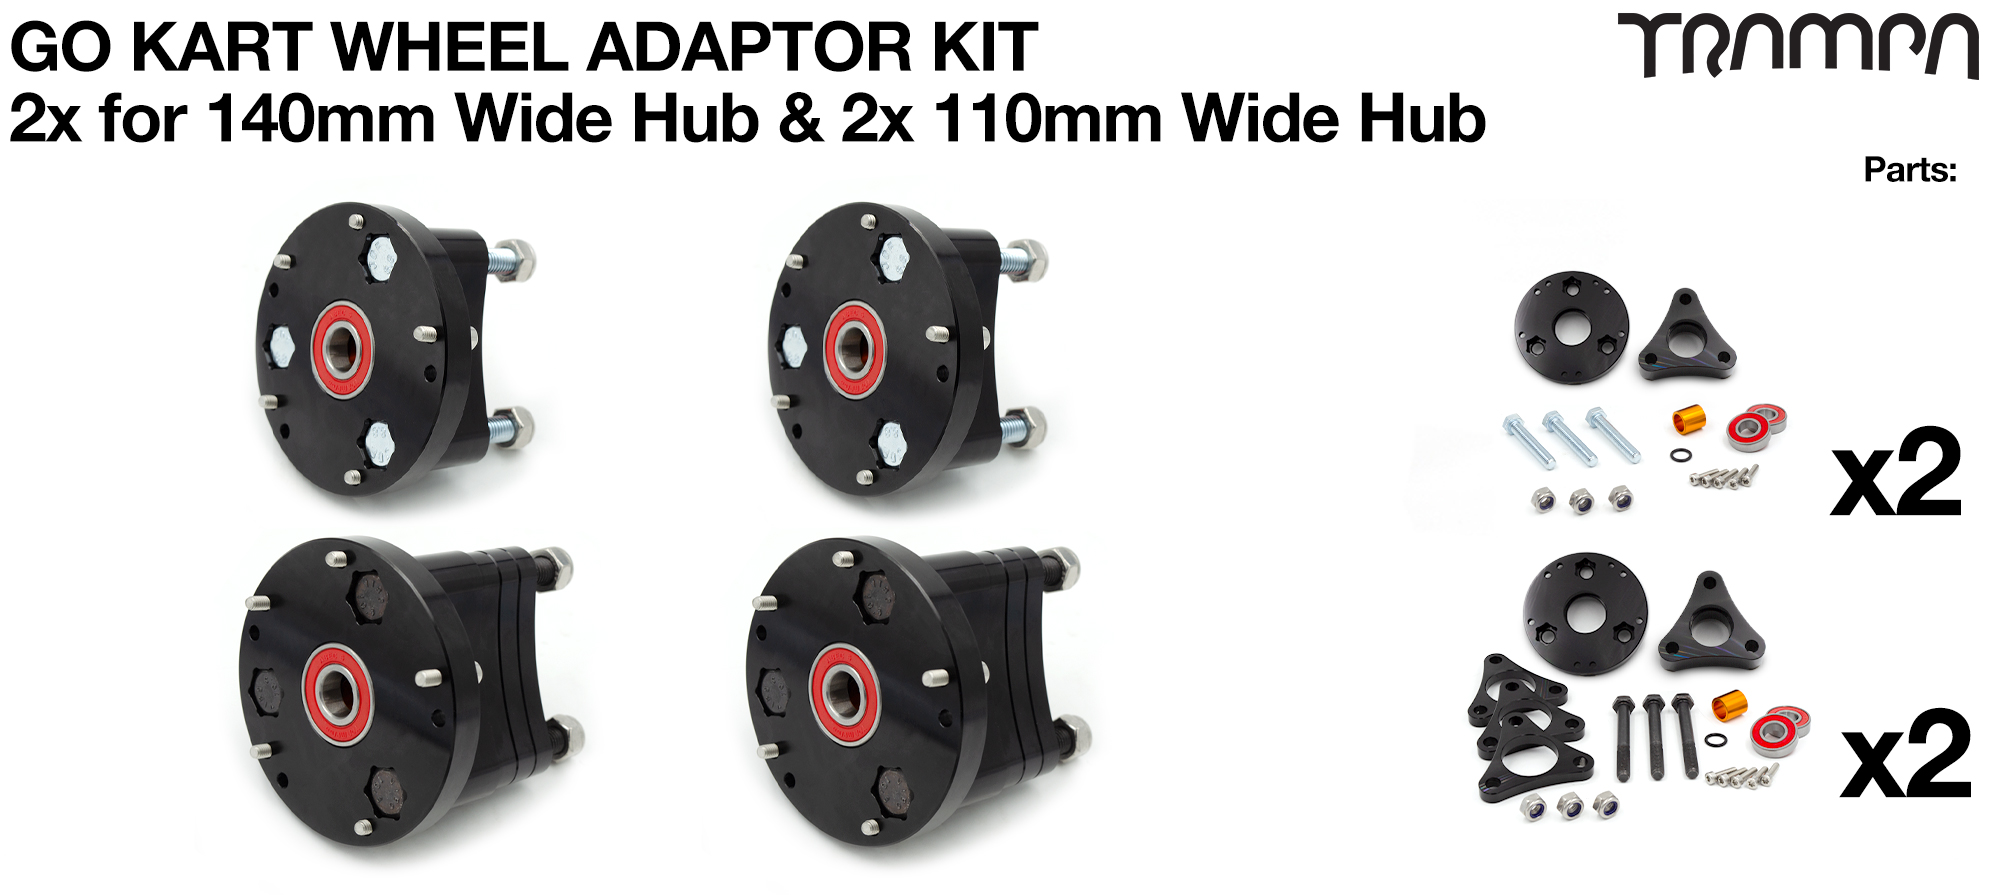 Go Kart WHEEL Adaptors - FRONT 110mm x2 & REAR 140mm x2